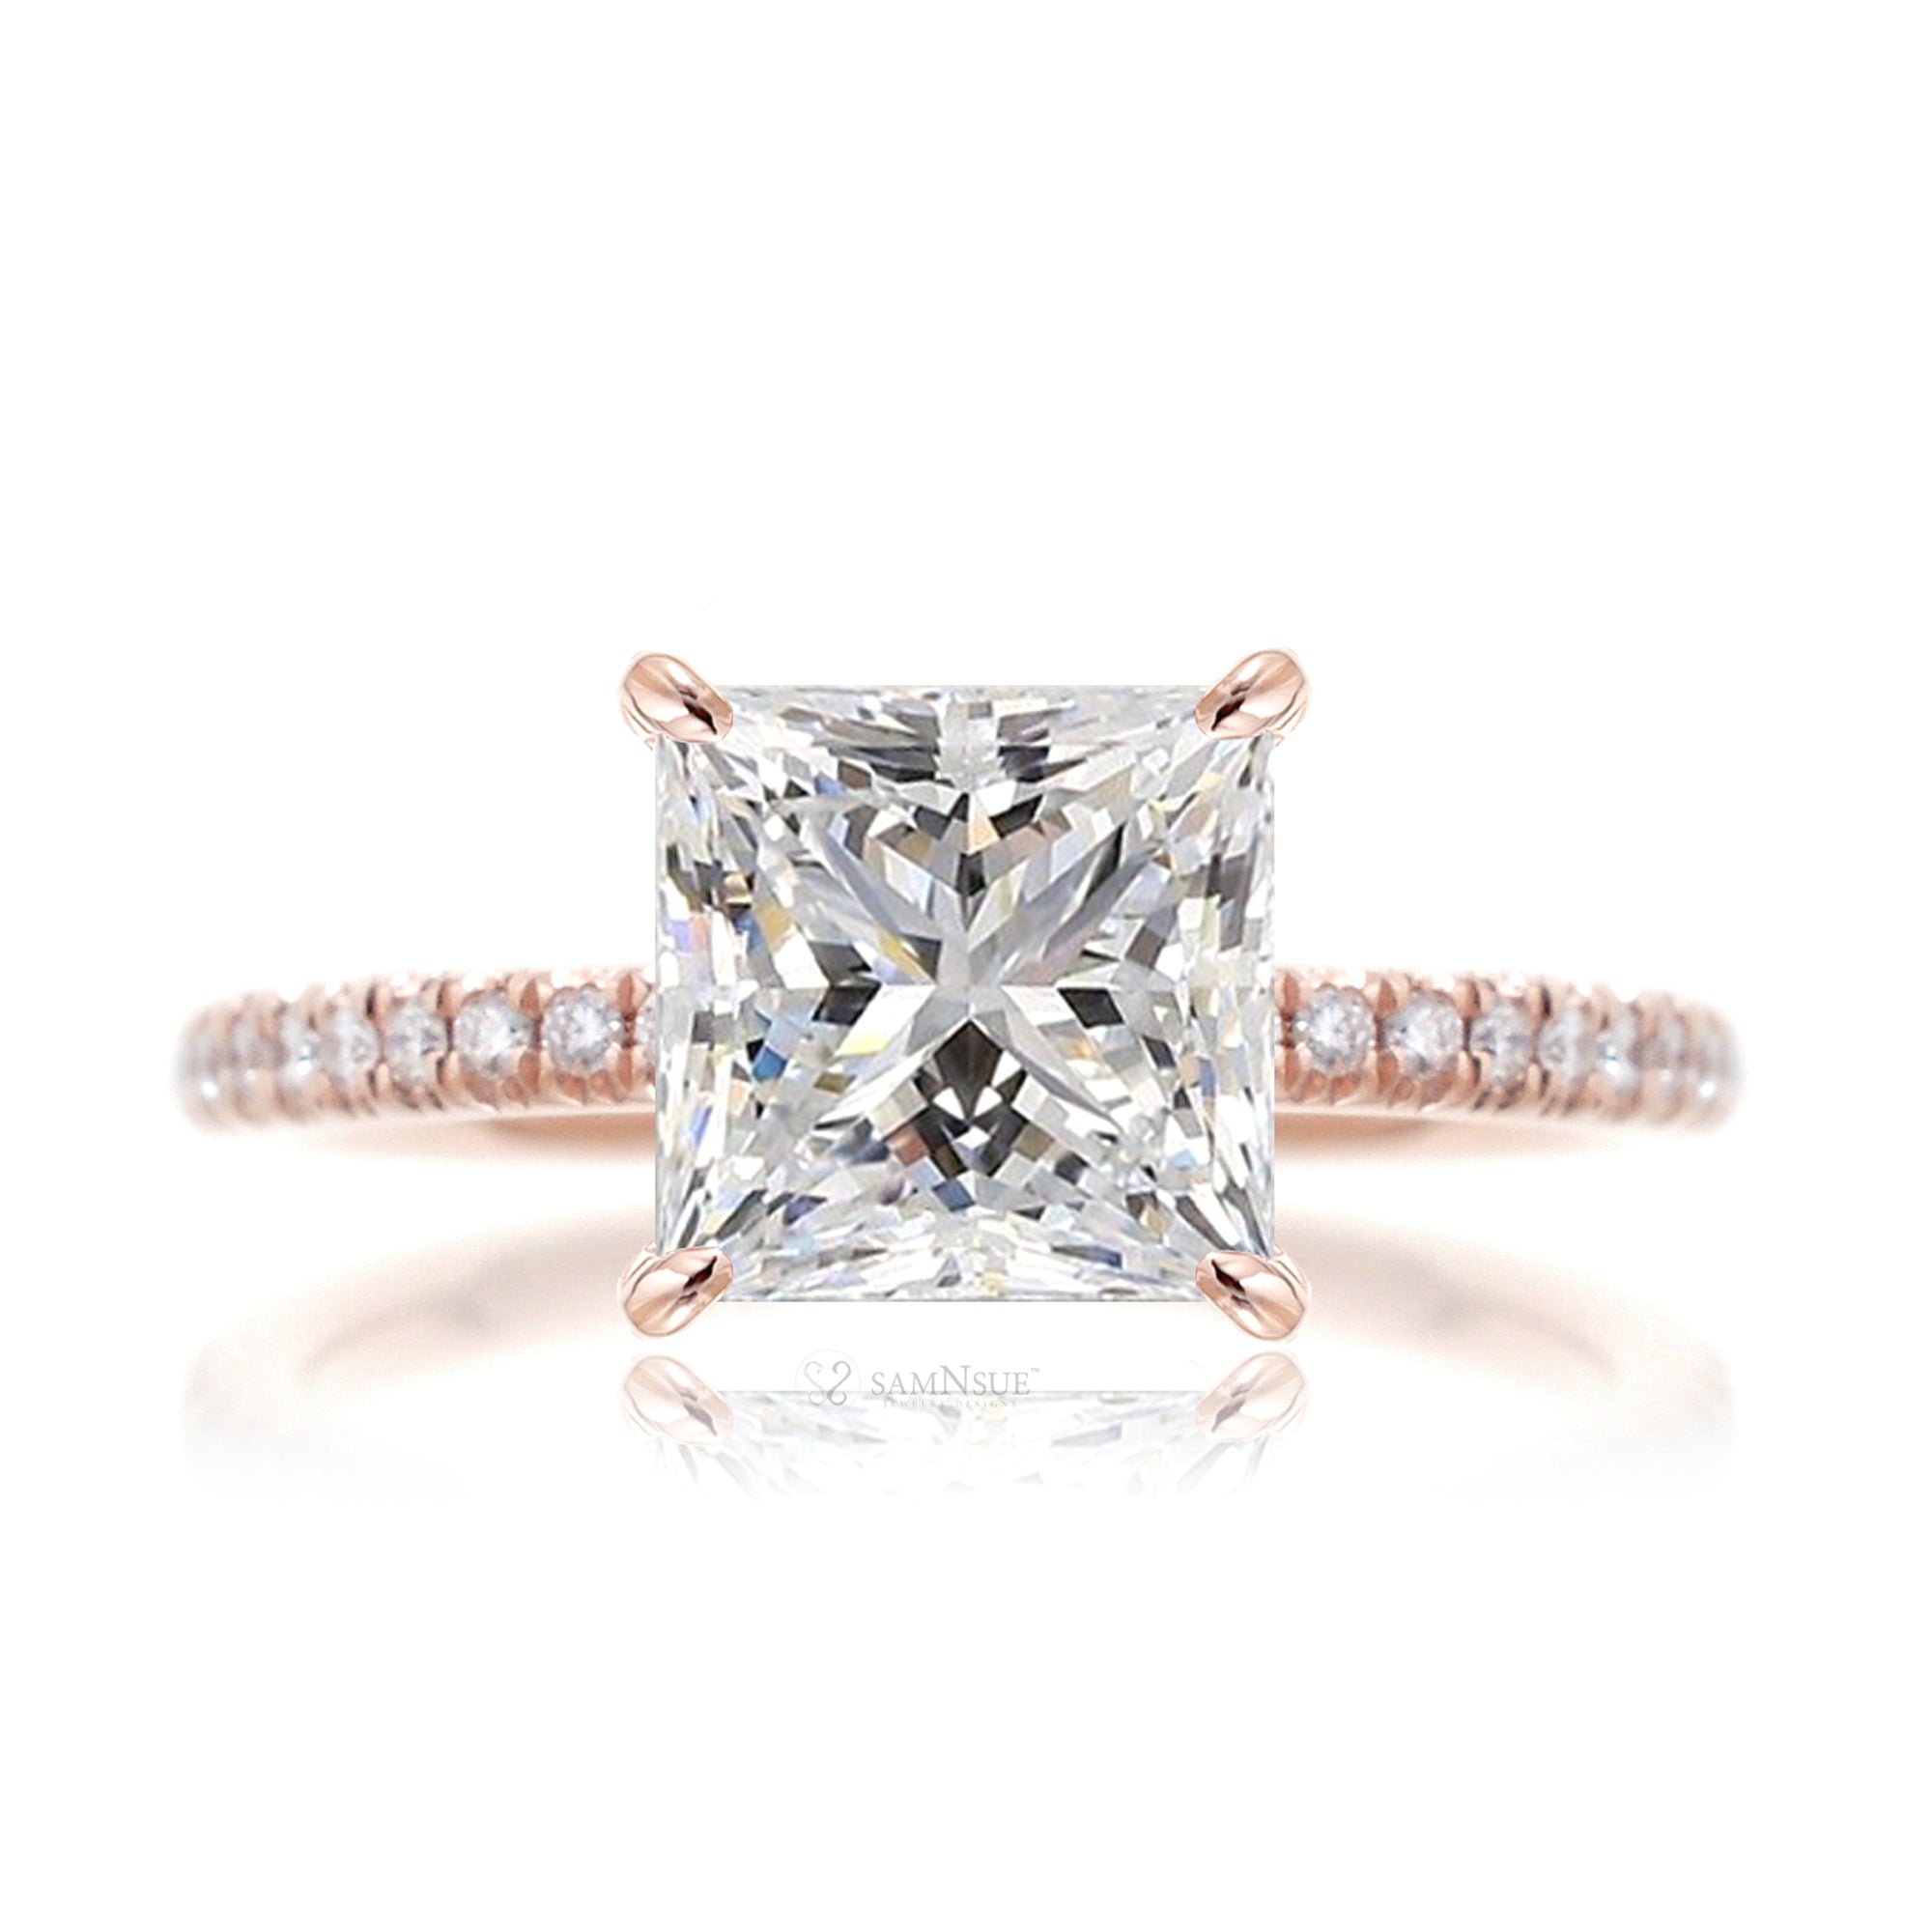 Princess cut lab-grown diamond engagement ring rose gold - The Ava